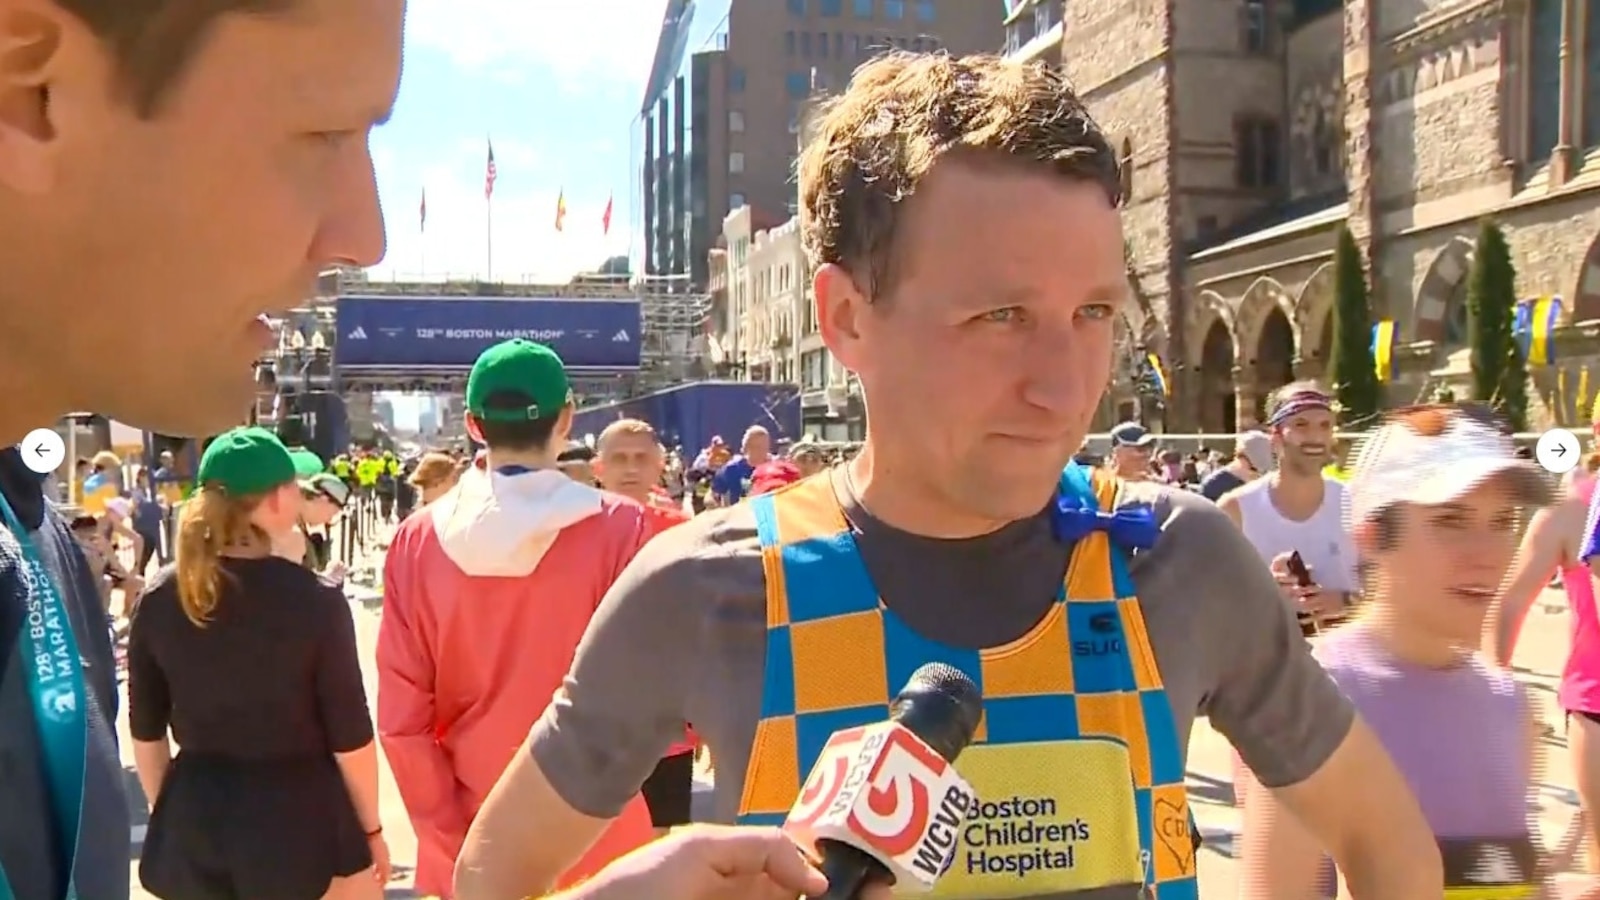 Dad runs Boston Marathon in memory of 3 slain children